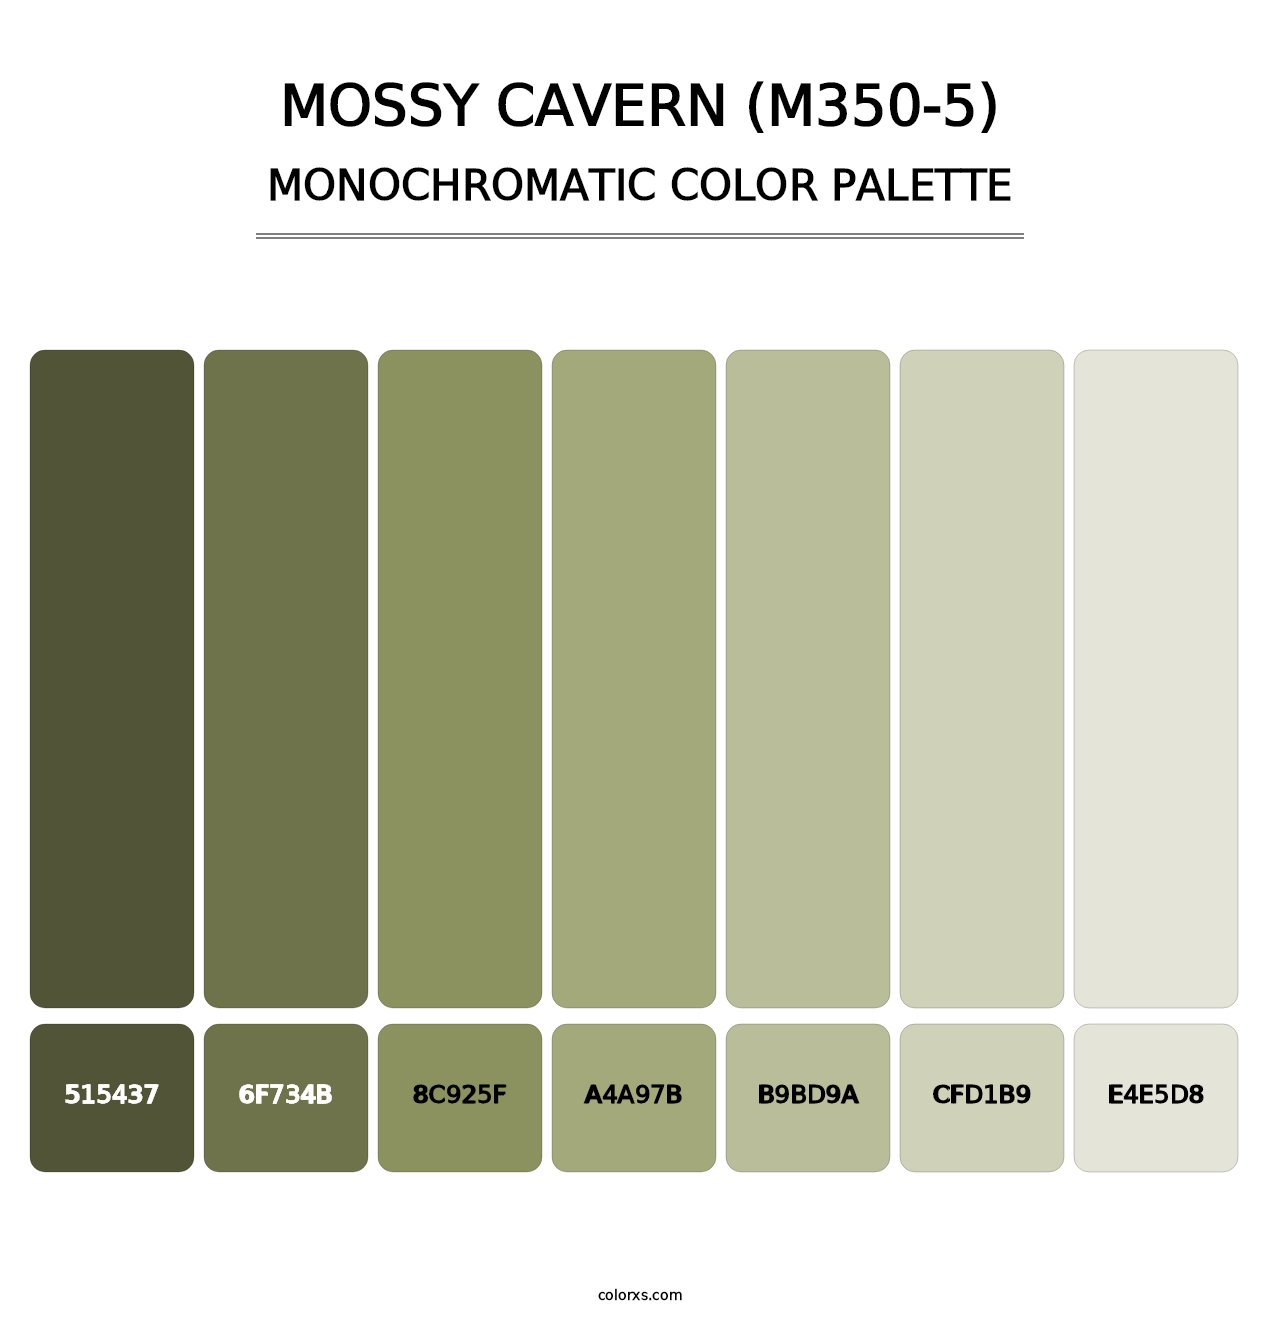 Mossy Cavern (M350-5) - Monochromatic Color Palette